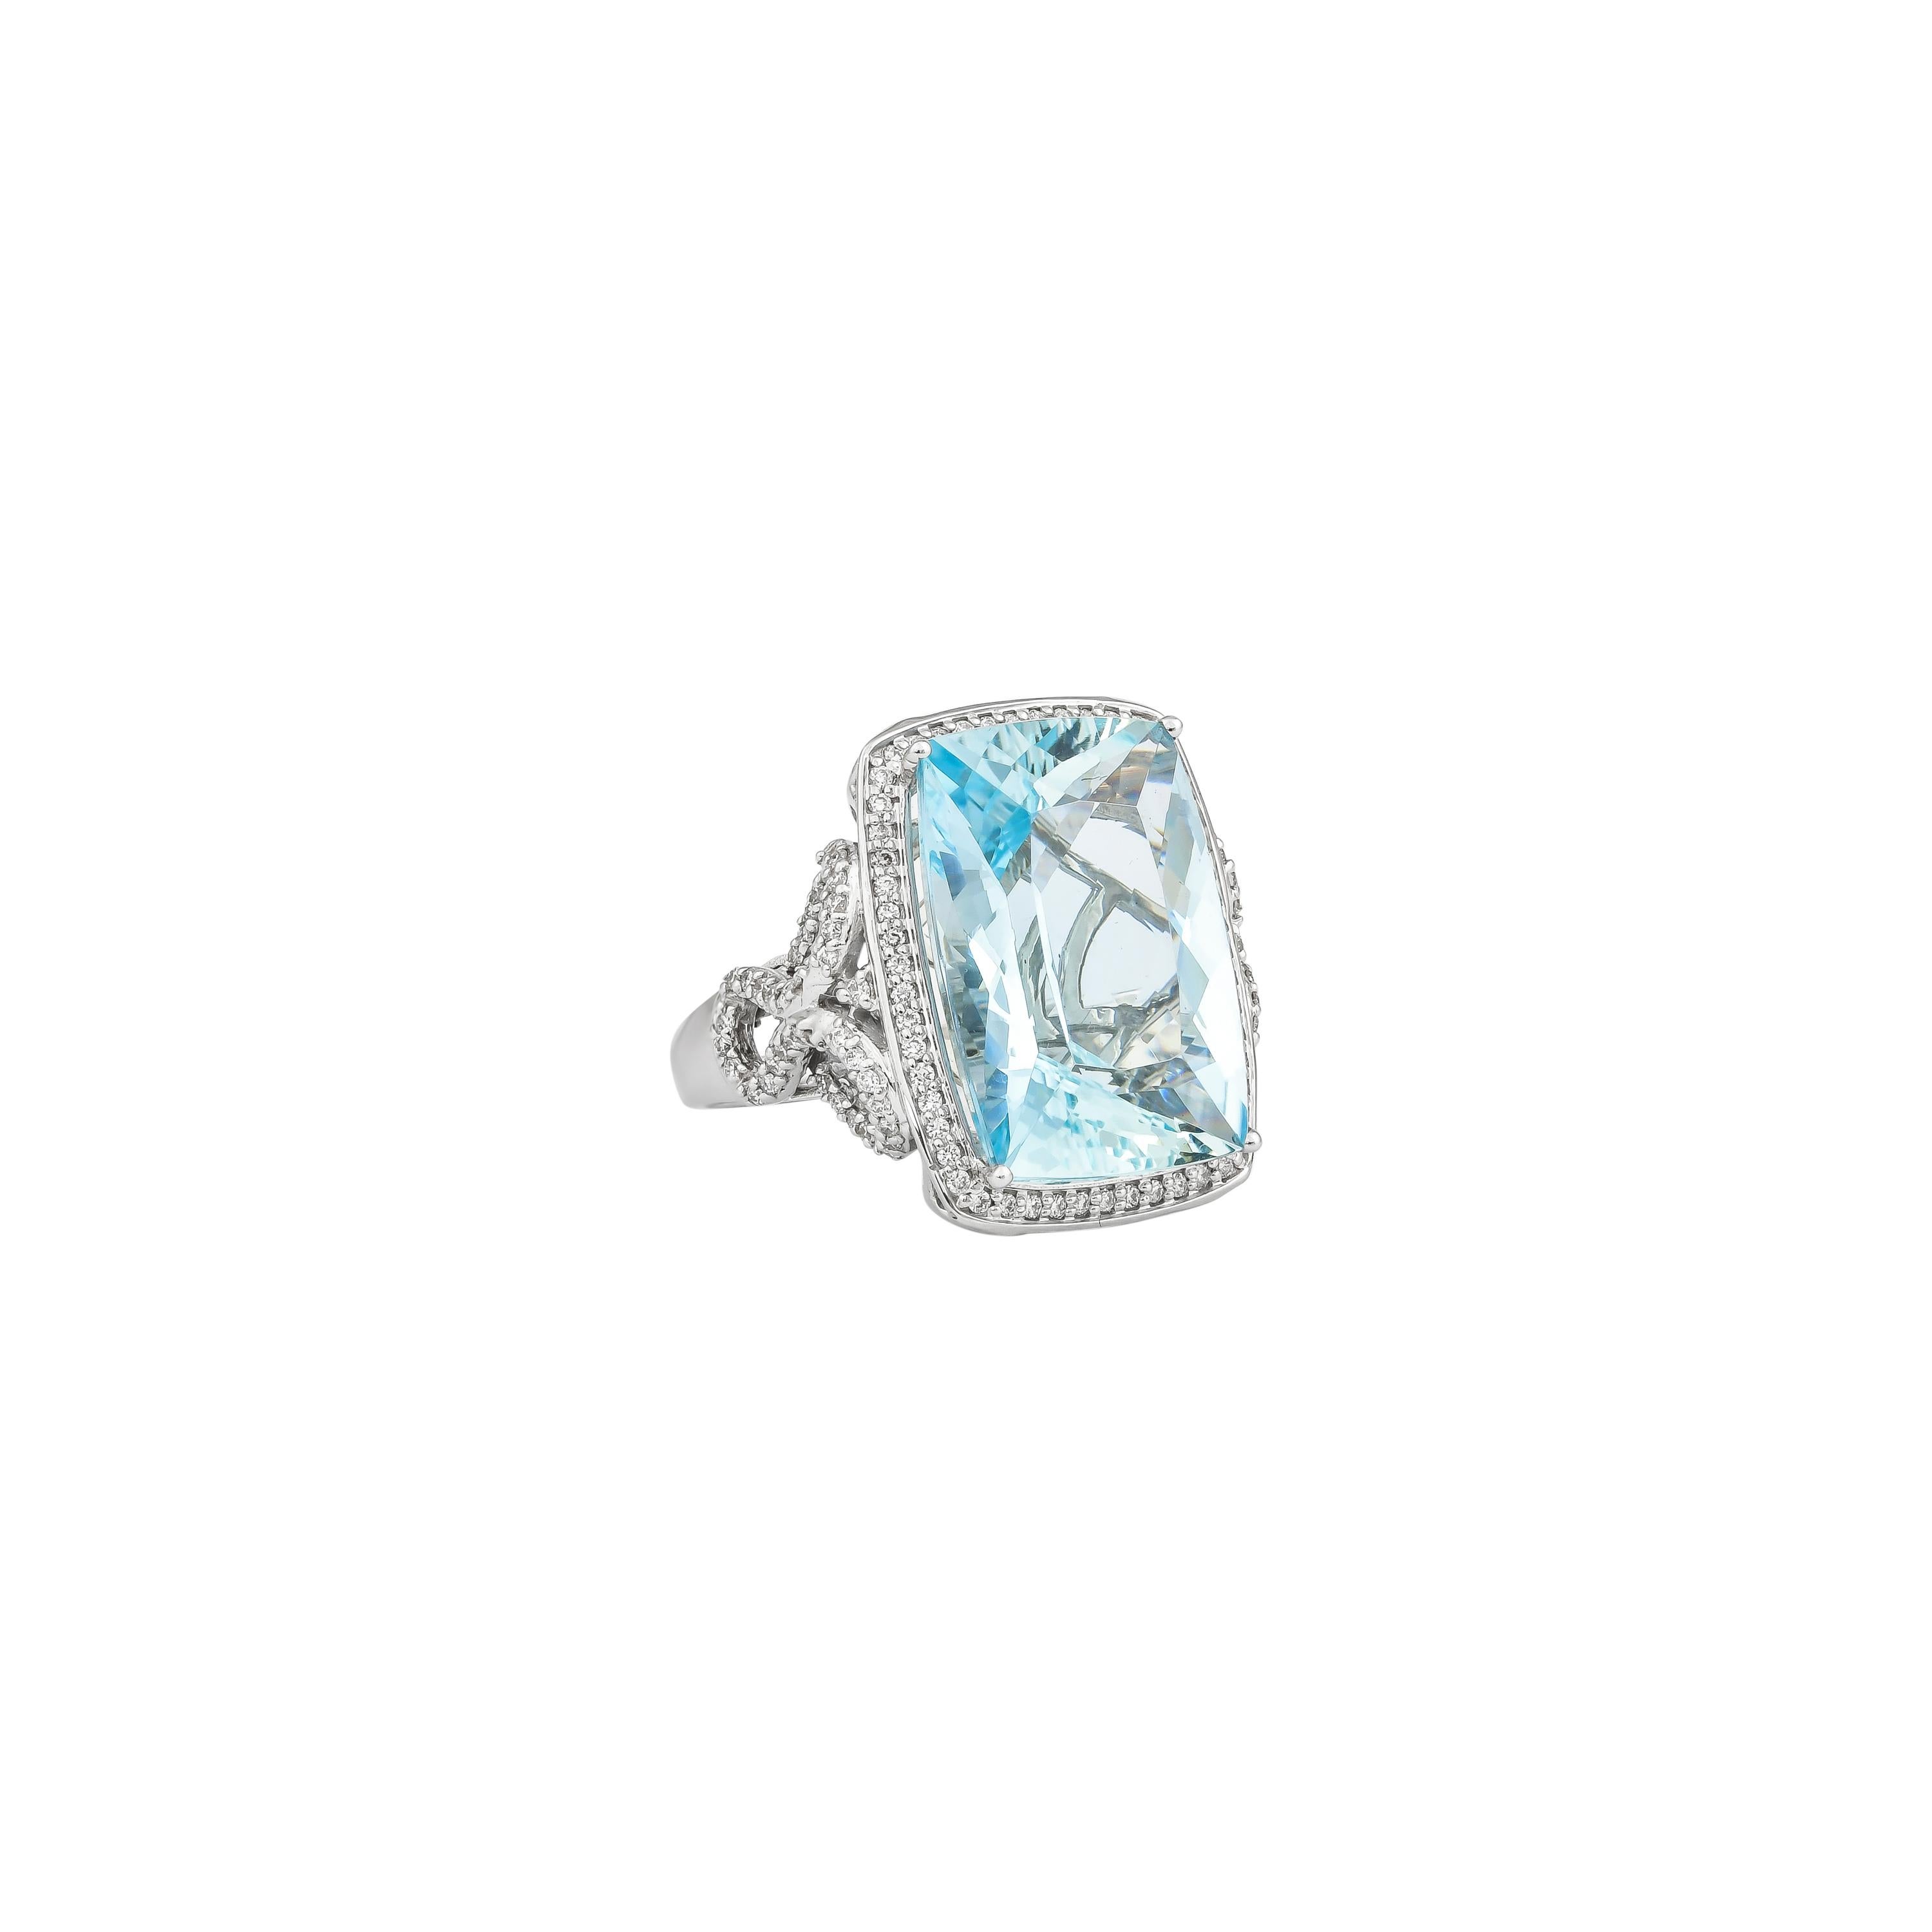 Contemporary 13.8 Carat Aquamarine and Diamond Ring in 18 Karat White Gold For Sale